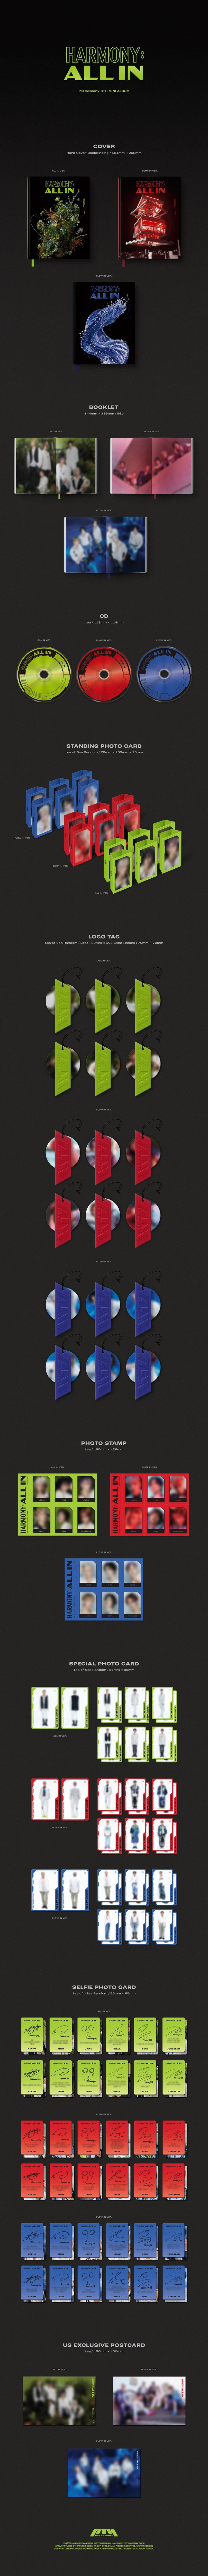 P1Harmony 3rd Mini Album [DISHARMONY : FIND OUT] CD+P.Book+P.Card+